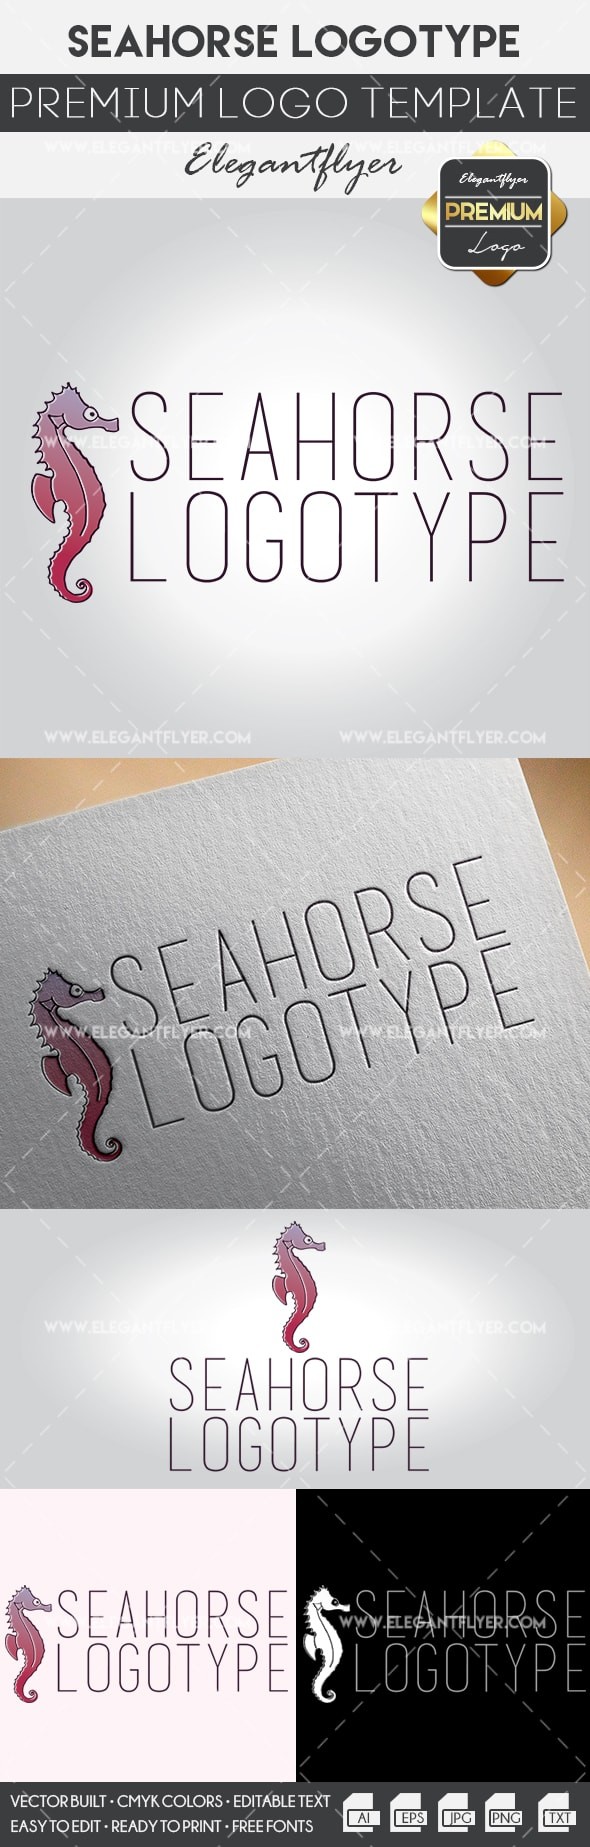 Seahorse by ElegantFlyer